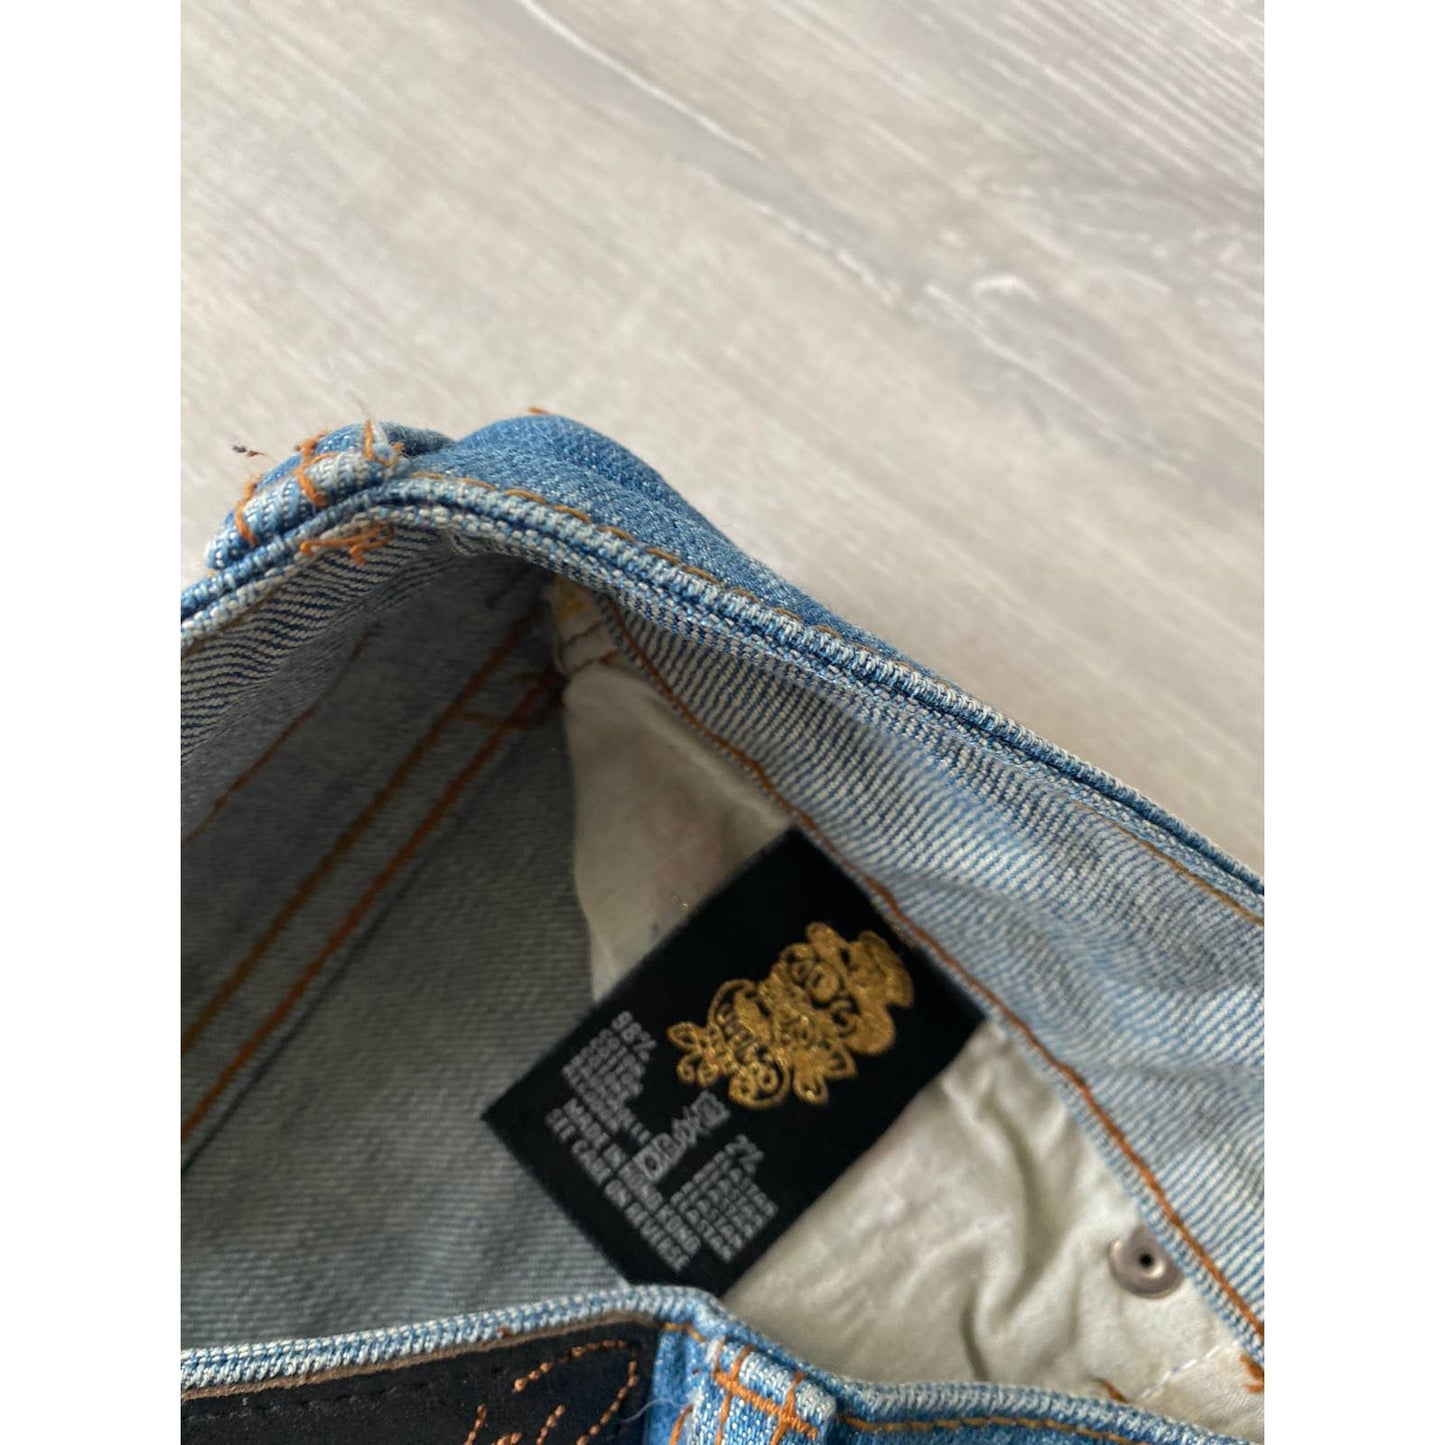 Ed Hardy Christian Audigier vintage jeans big logo pants